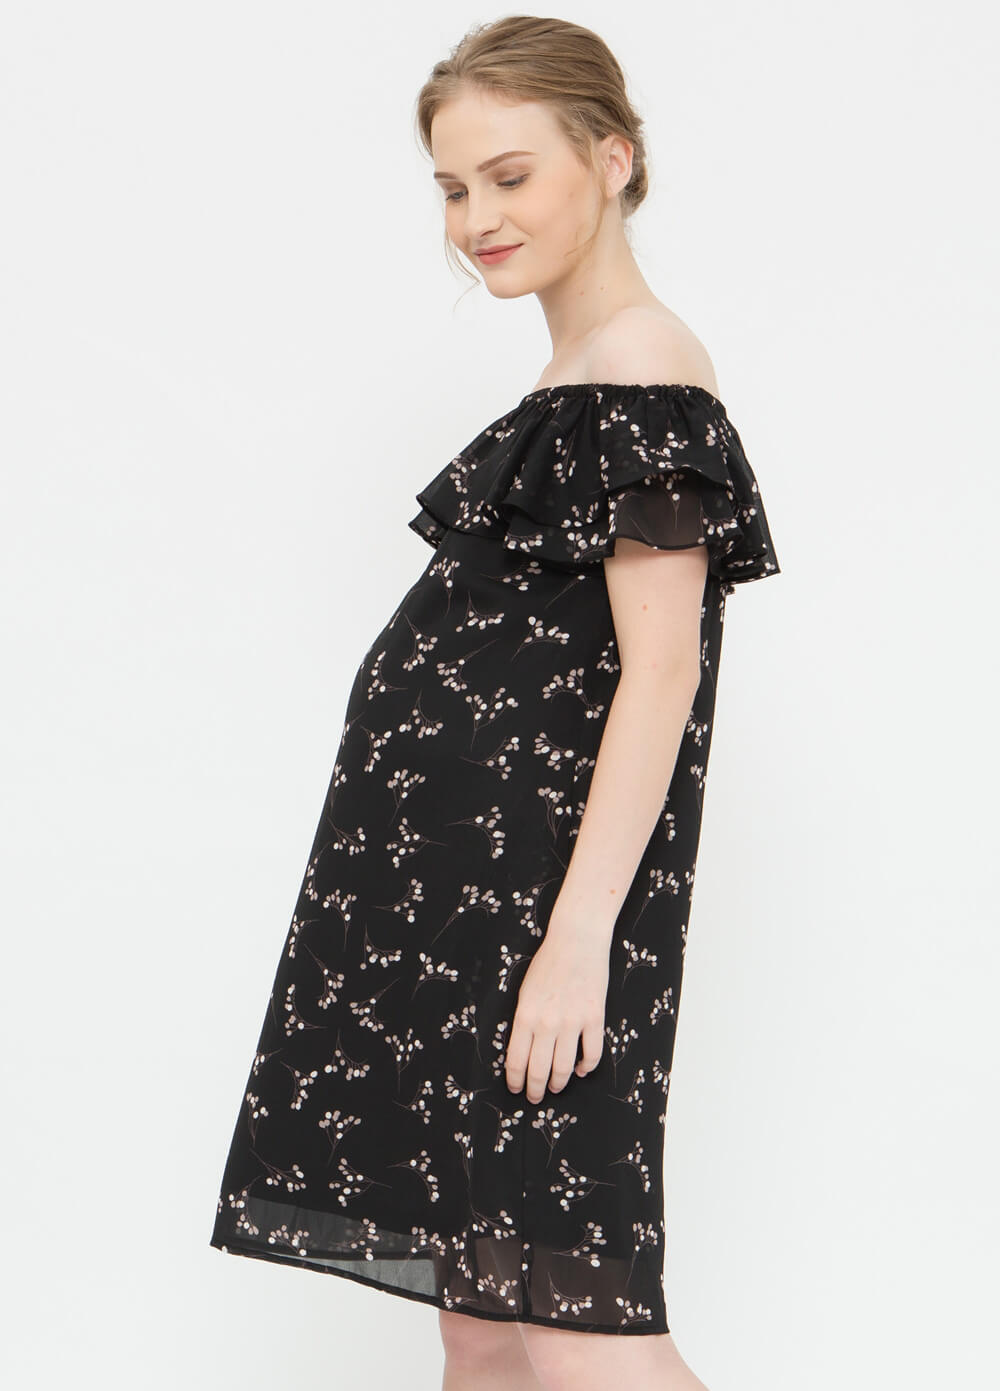 Clarinda Maternity Nursing Party Dress in Black Print by Spring